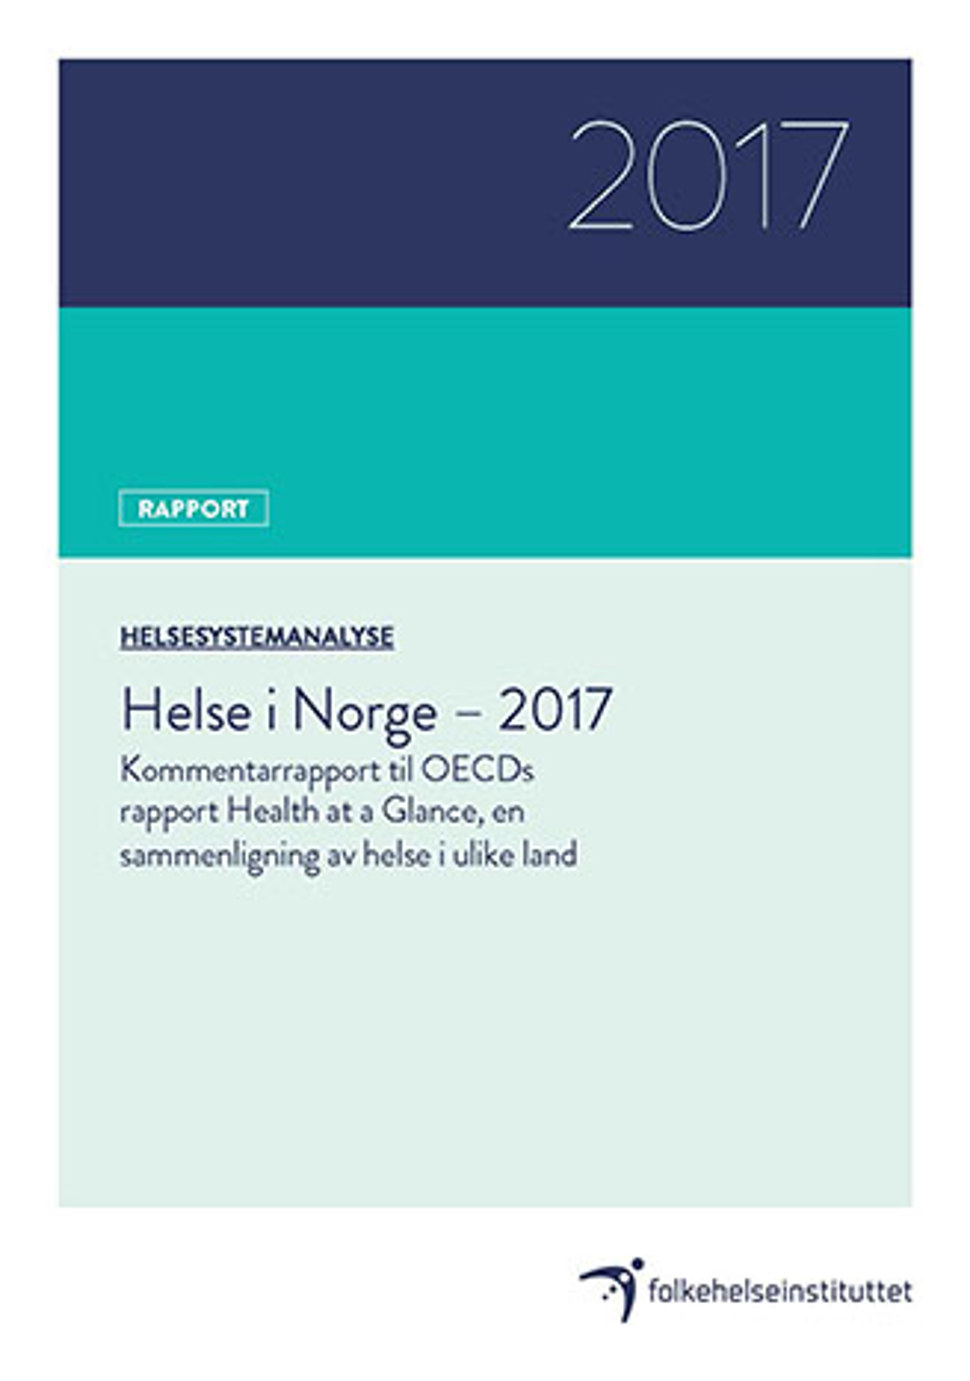 Helse i Norge – 2017: Kommentarrapport for OECDs sammenligning av helse i ulike land